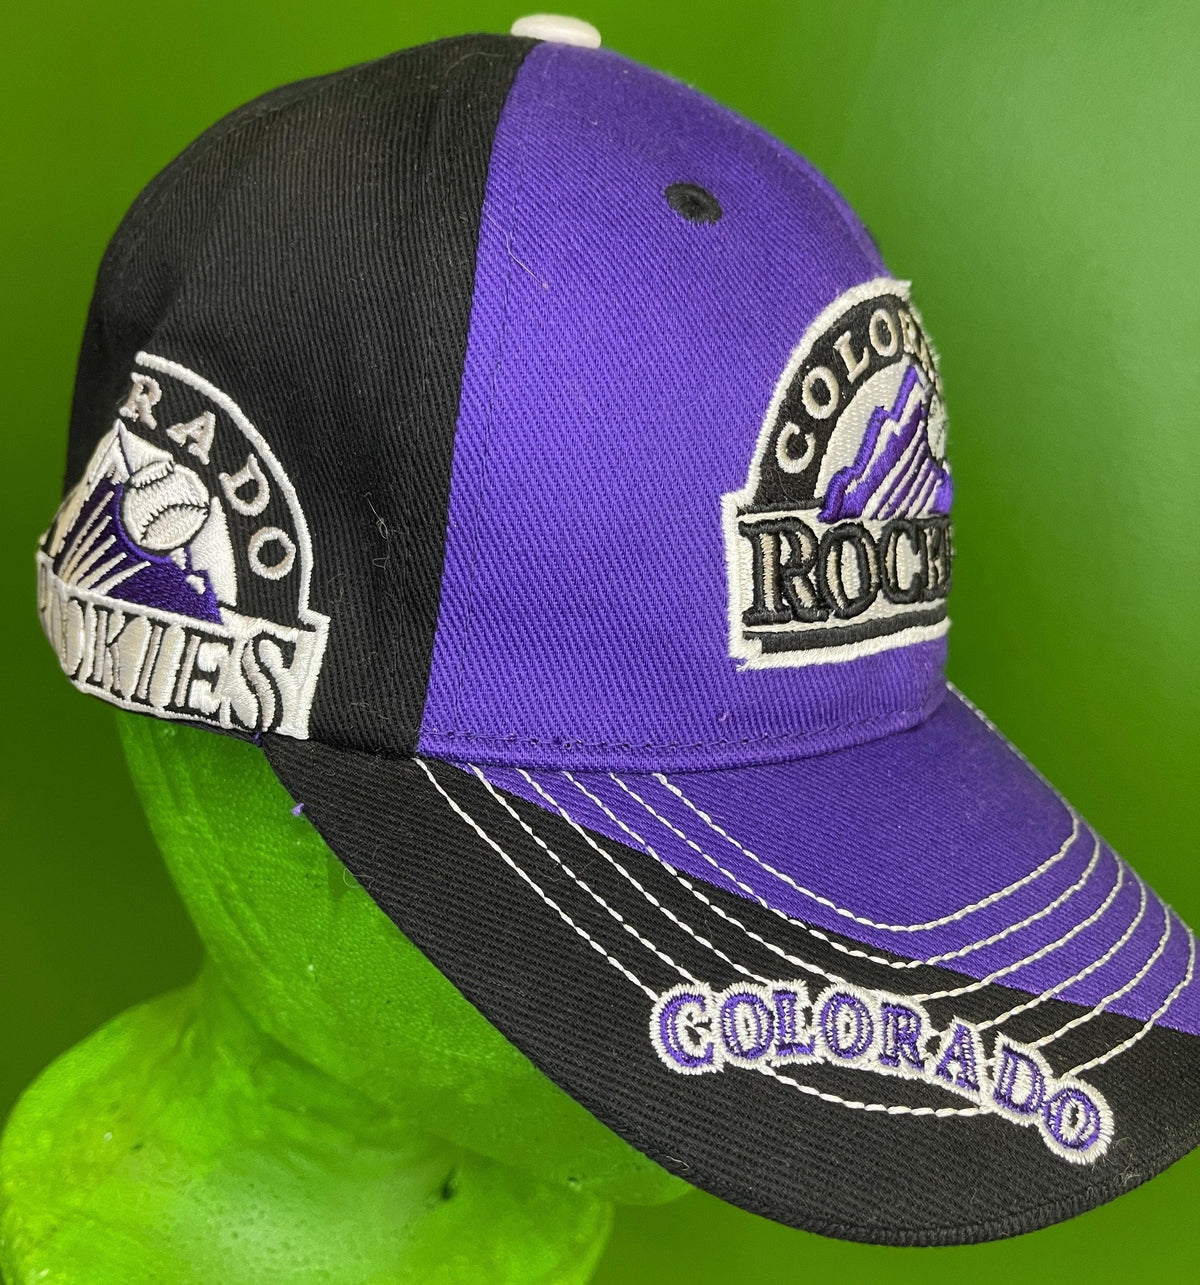 MLB Colorado Rockies Baseball Adjustable Purple and Black Cap OSFM